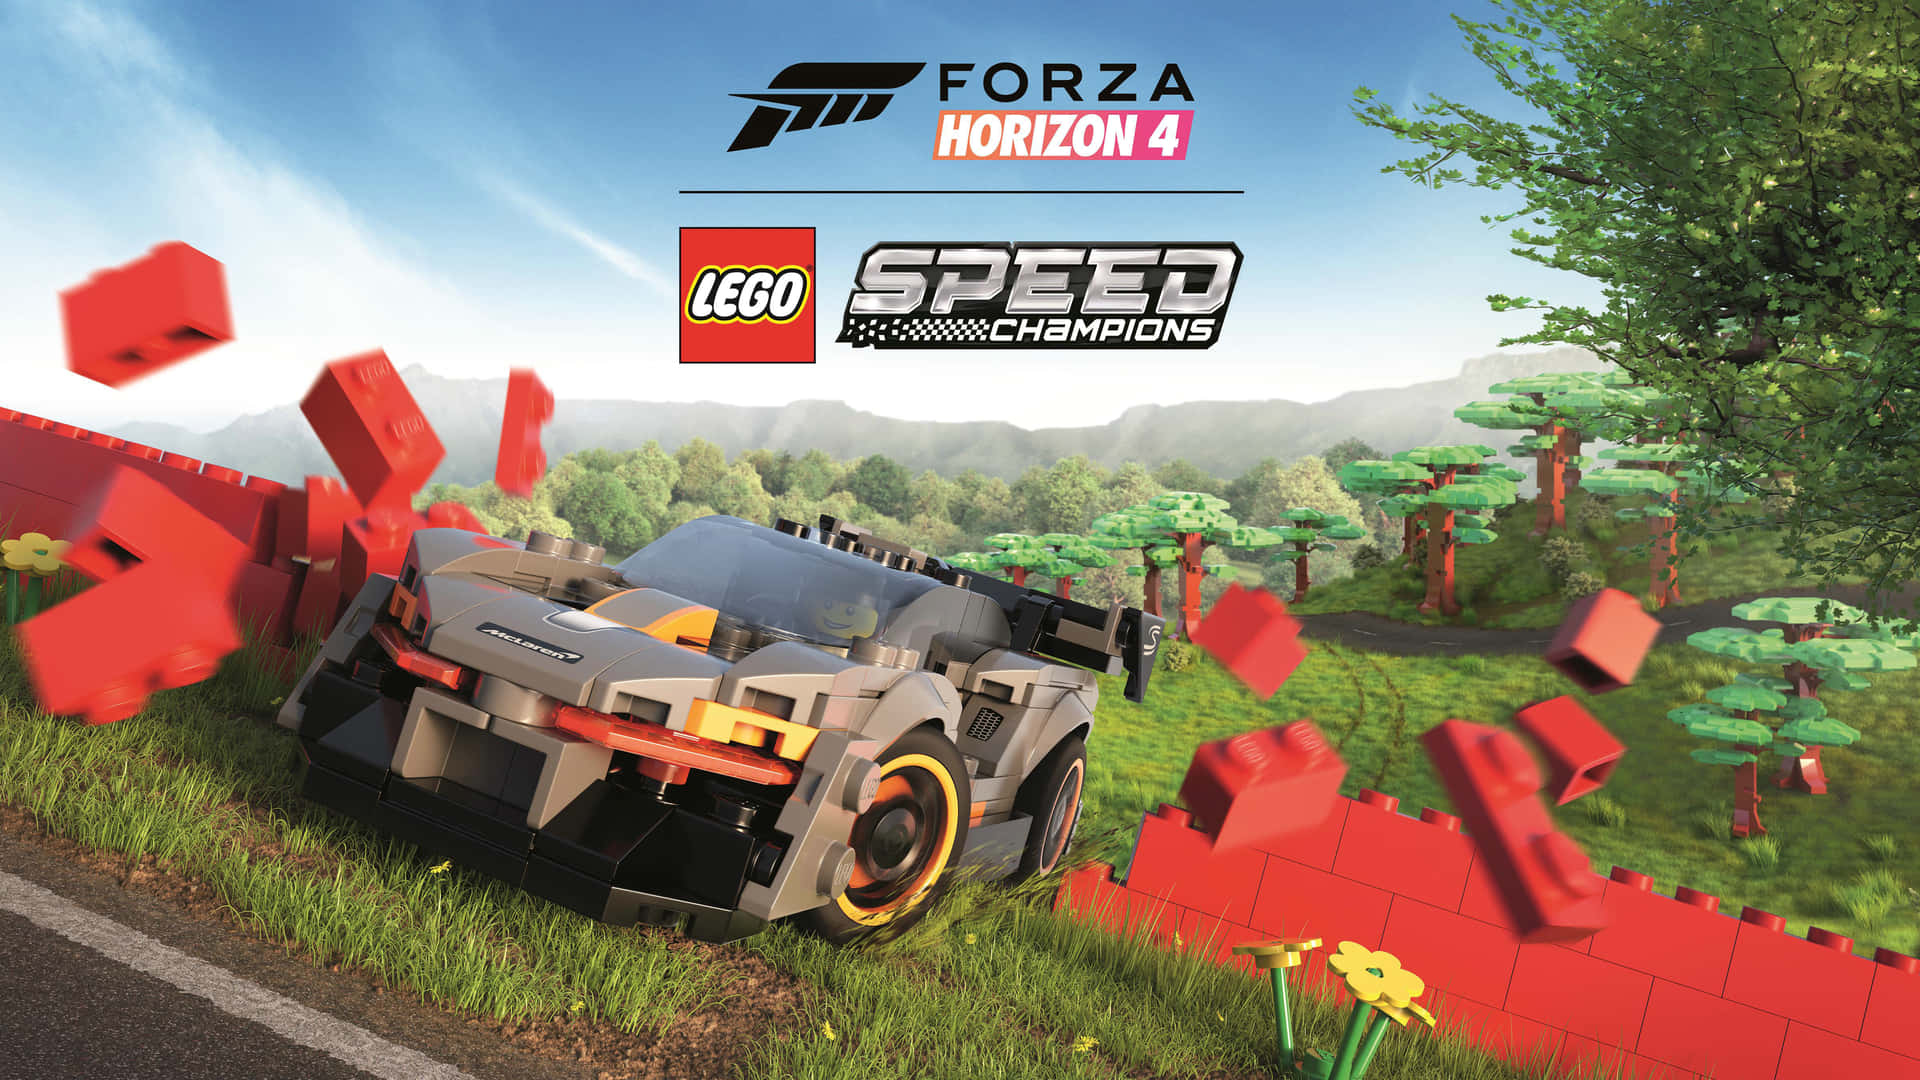 "Dynamic Clash of Power and Beauty - 4K Forza Horizon 4 Background"